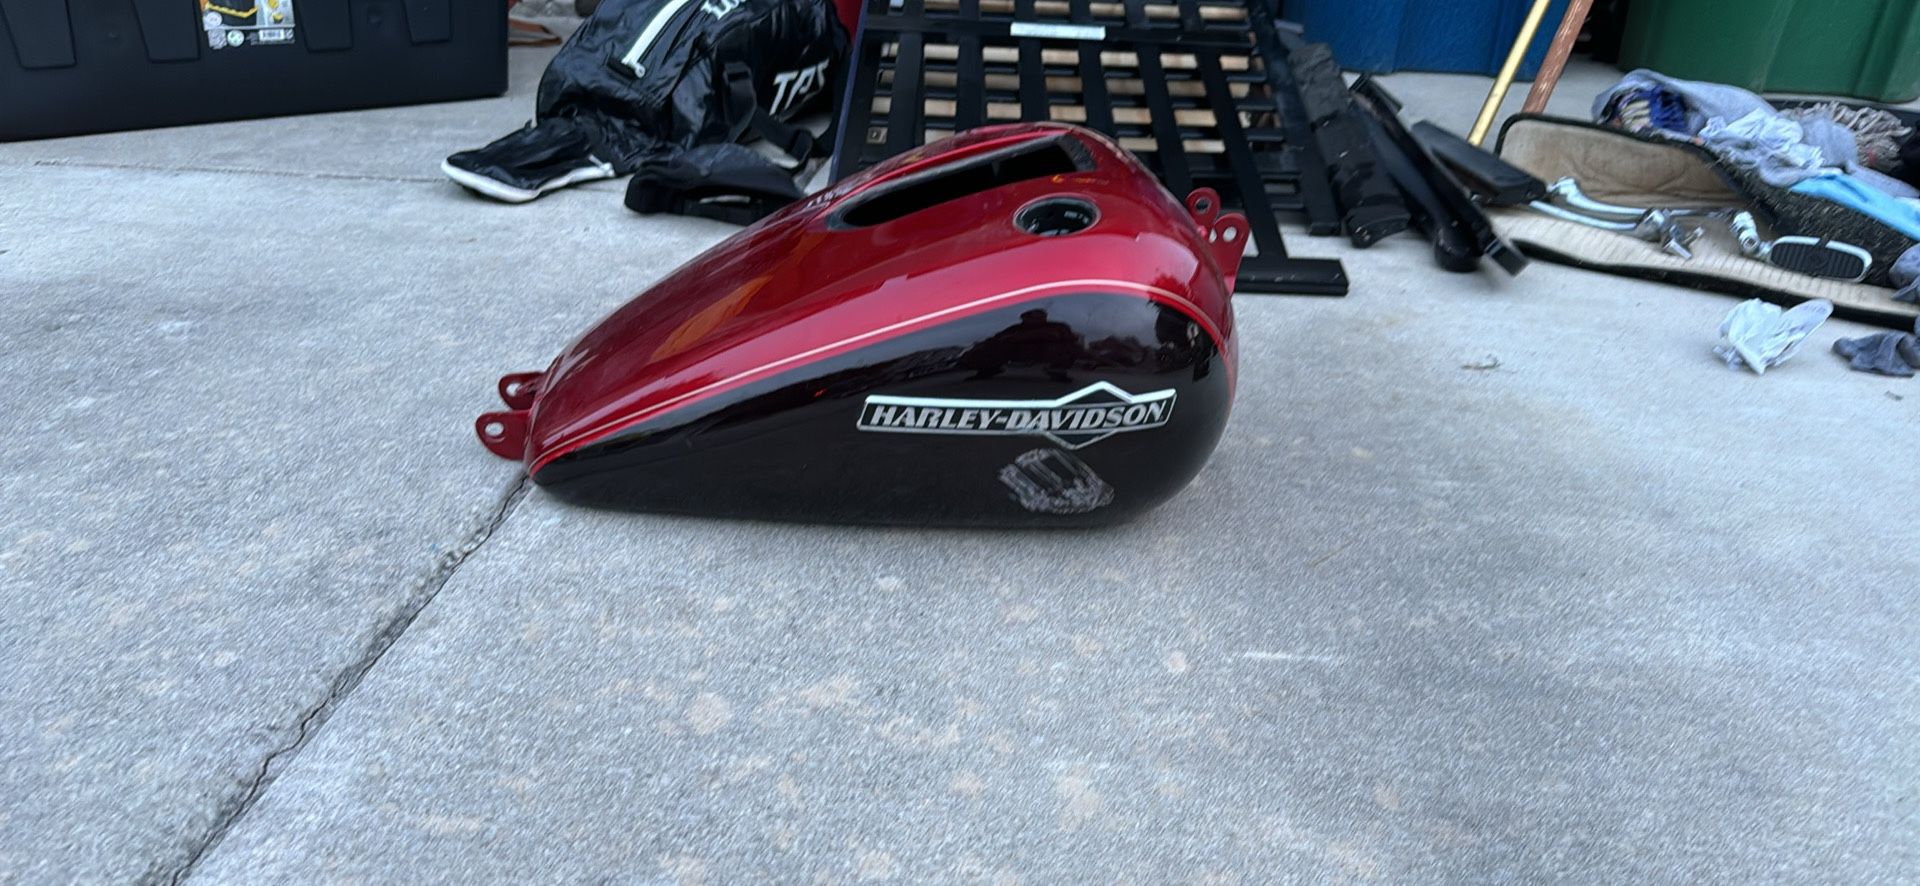 2012 Harley Davidson Dyna super glide custom